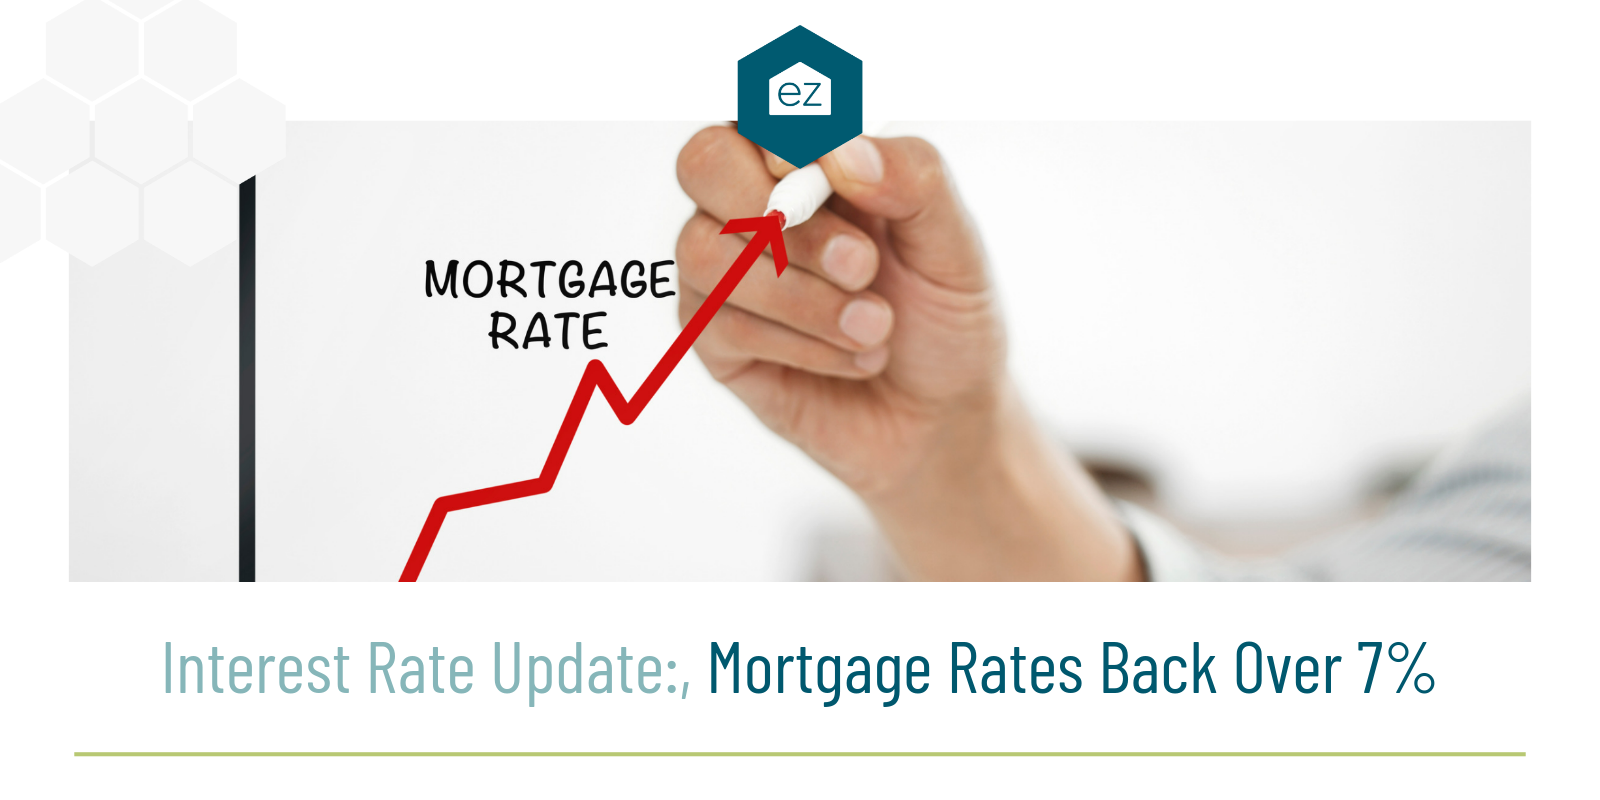 Mortgage Rates Increasing